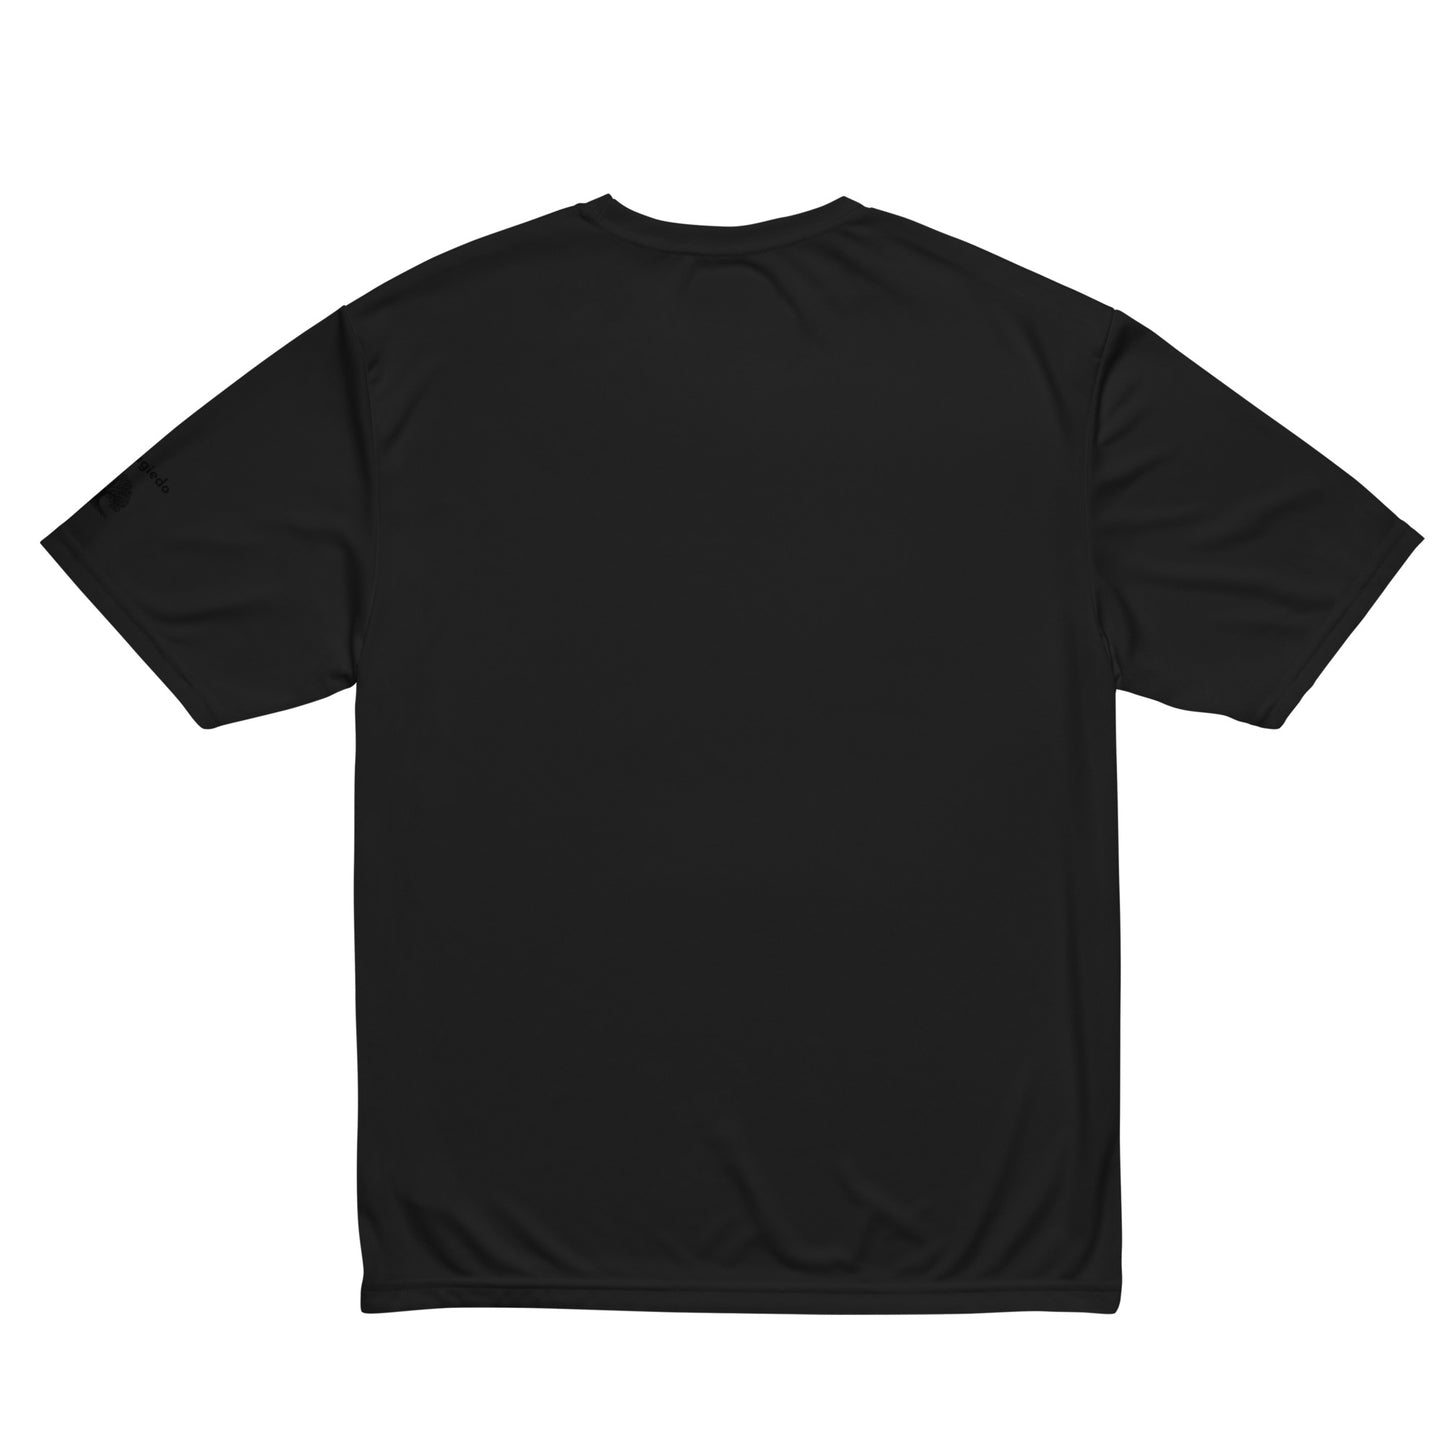 Unisex performance crew neck t-shirt - Lacrosse (Black)